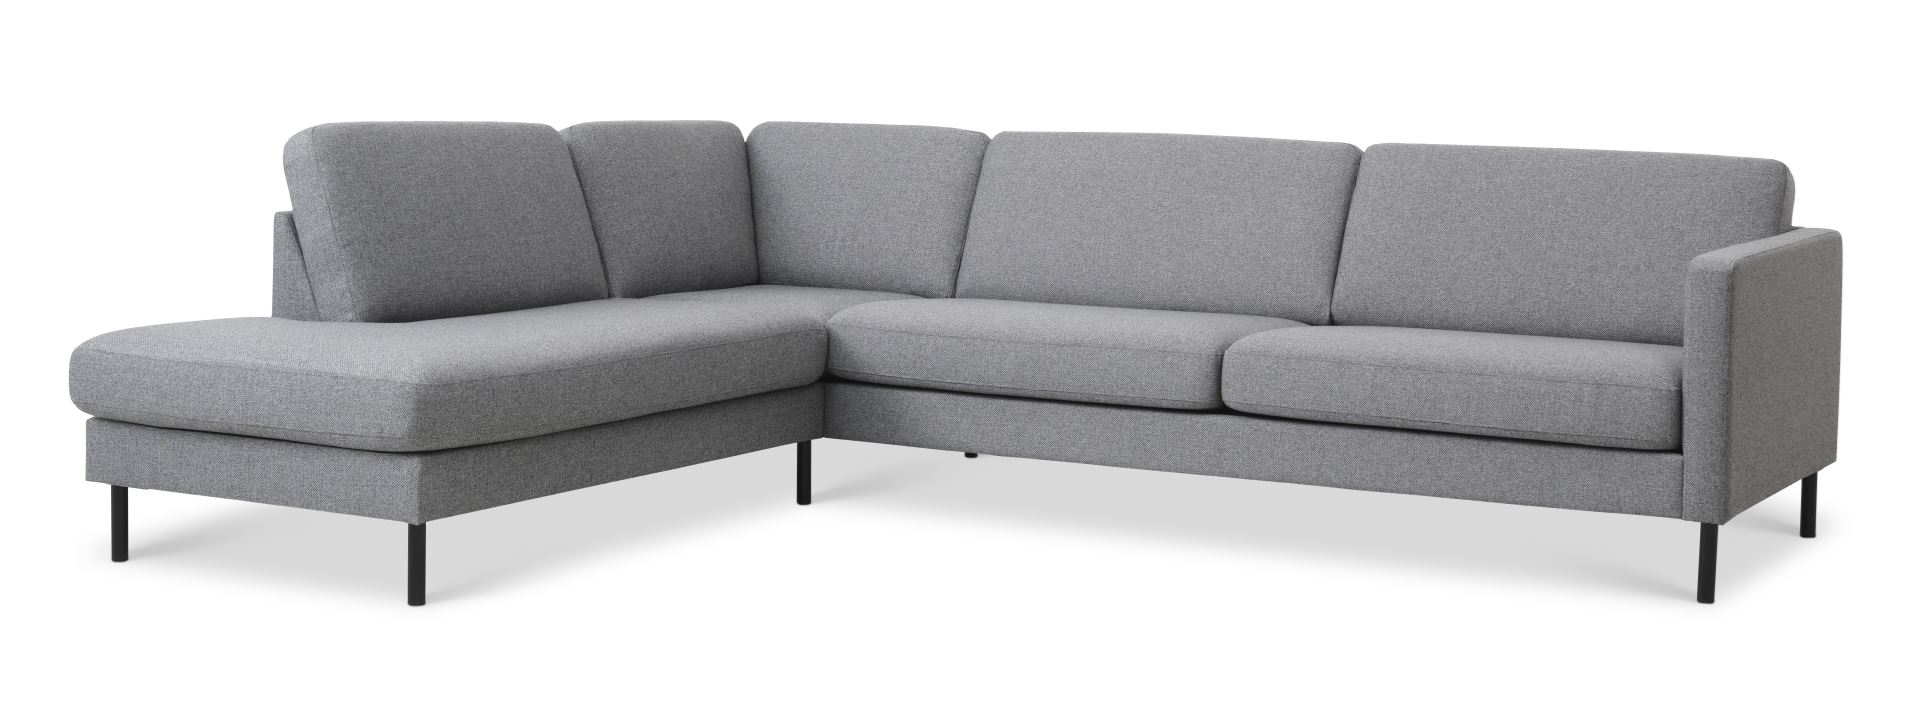 Ask sæt 60 stor OE sofa, m. venstre chaiselong - lys granitgrå polyester stof og sort metal